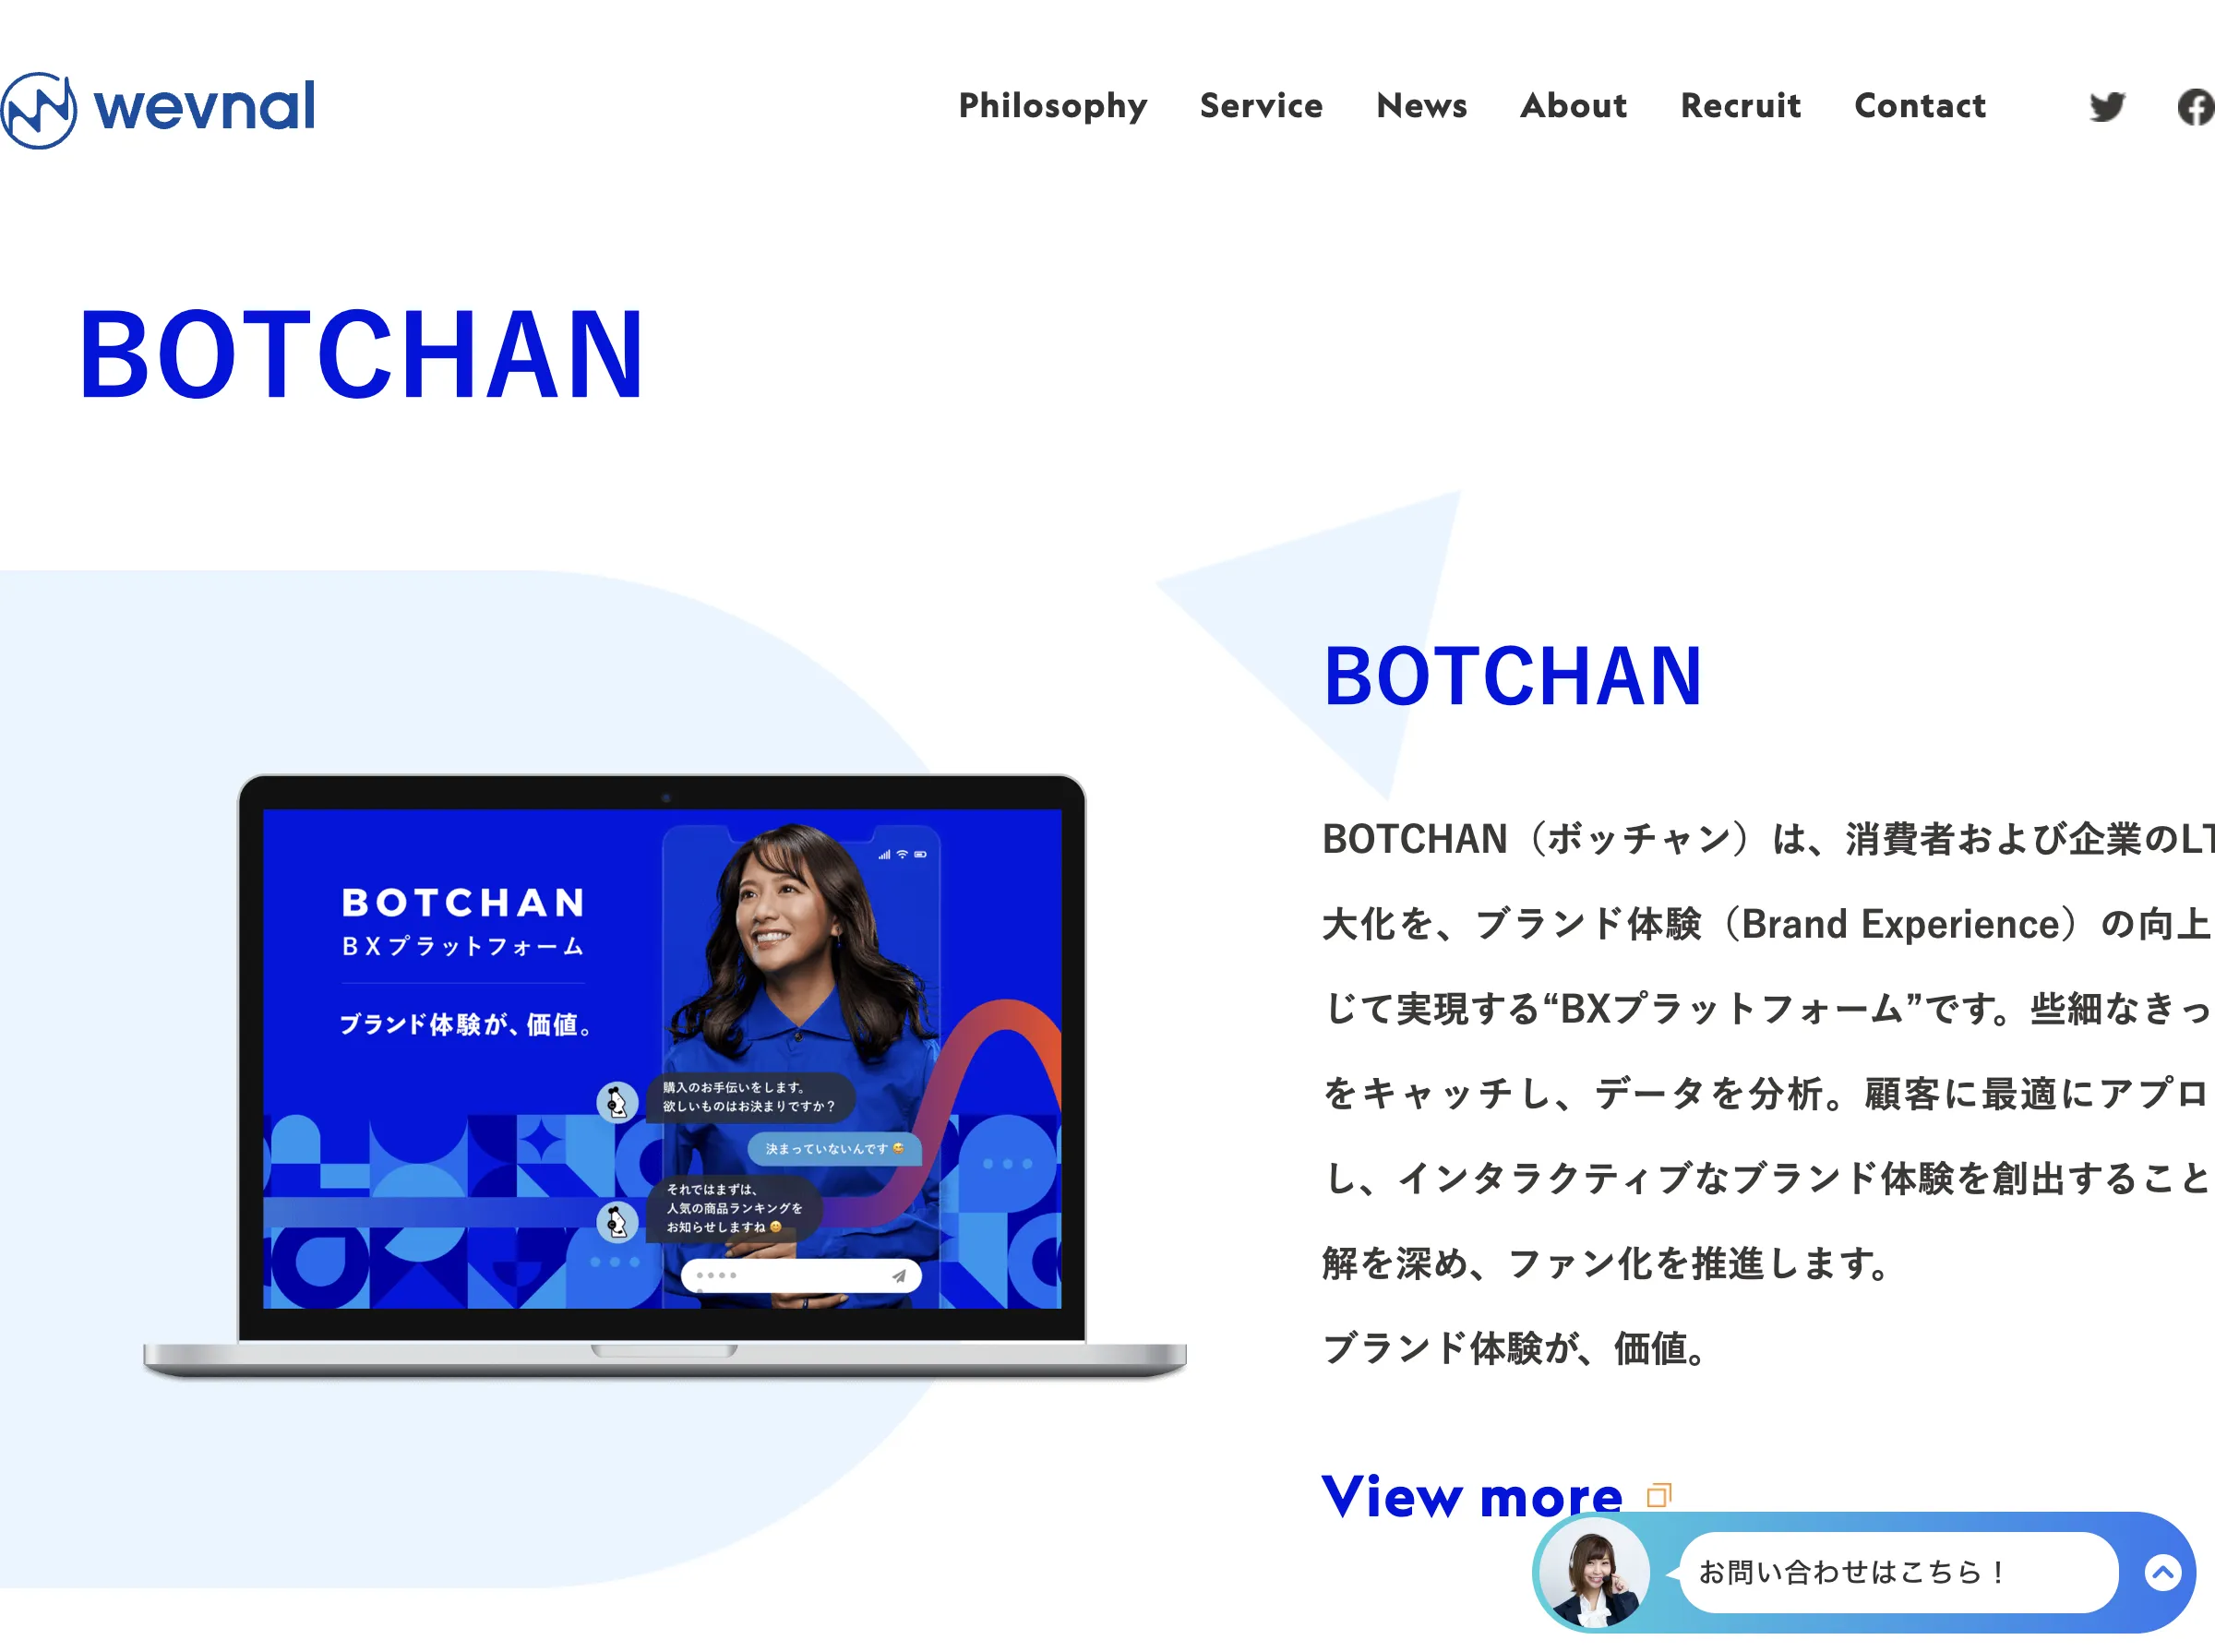 BOTCHAN(株式会社wevnal)